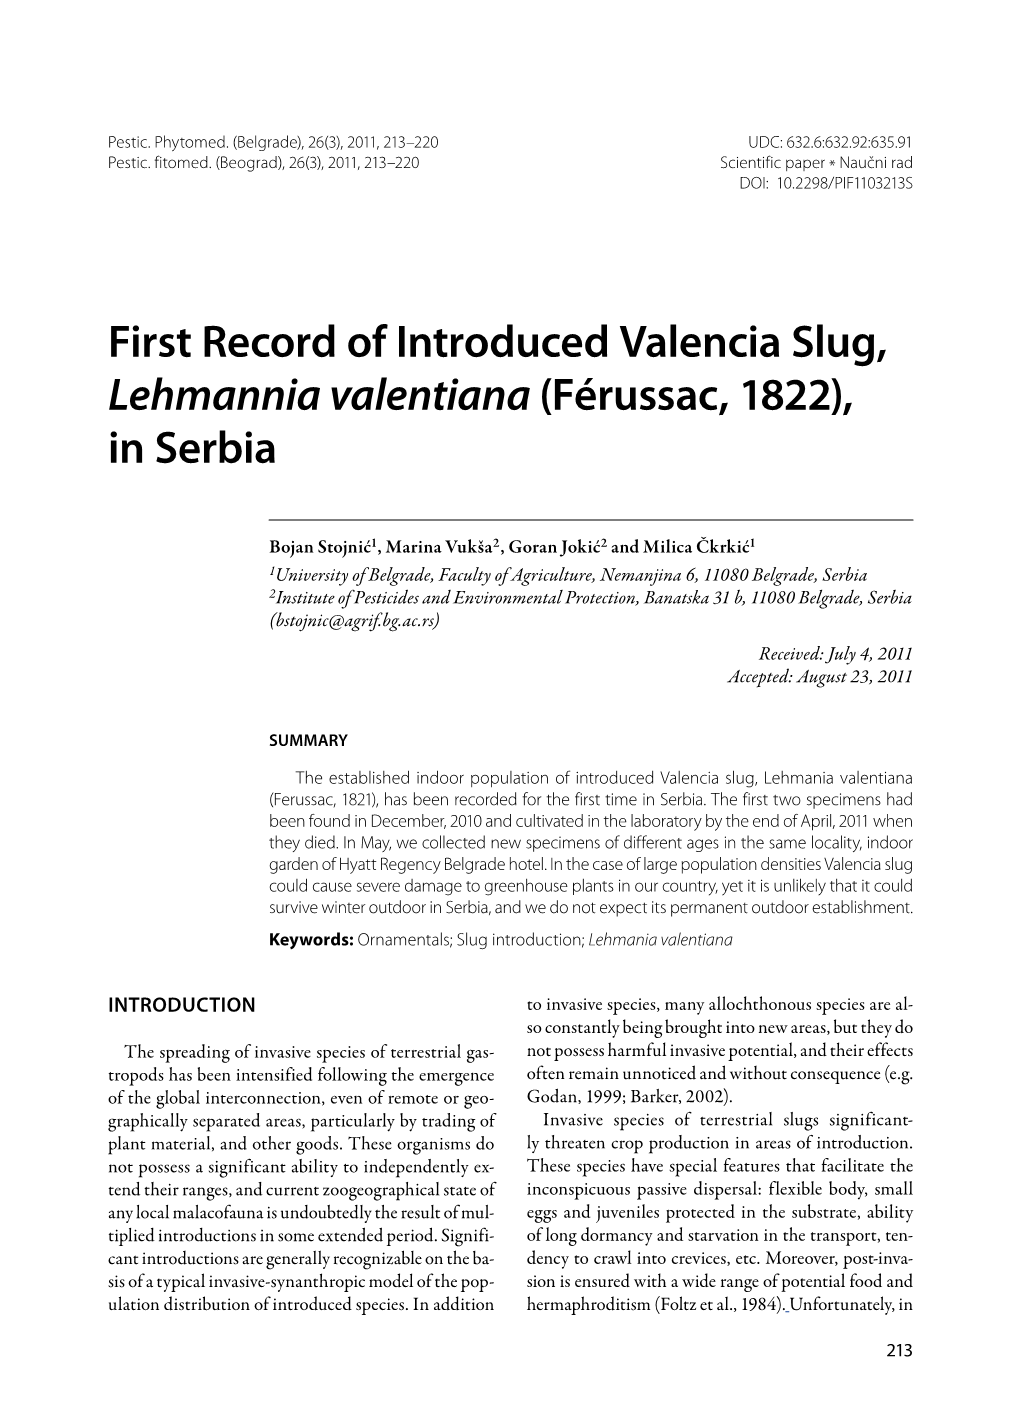 First Record of Introduced Valencia Slug, Lehmannia Valentiana (Férussac, 1822), in Serbia